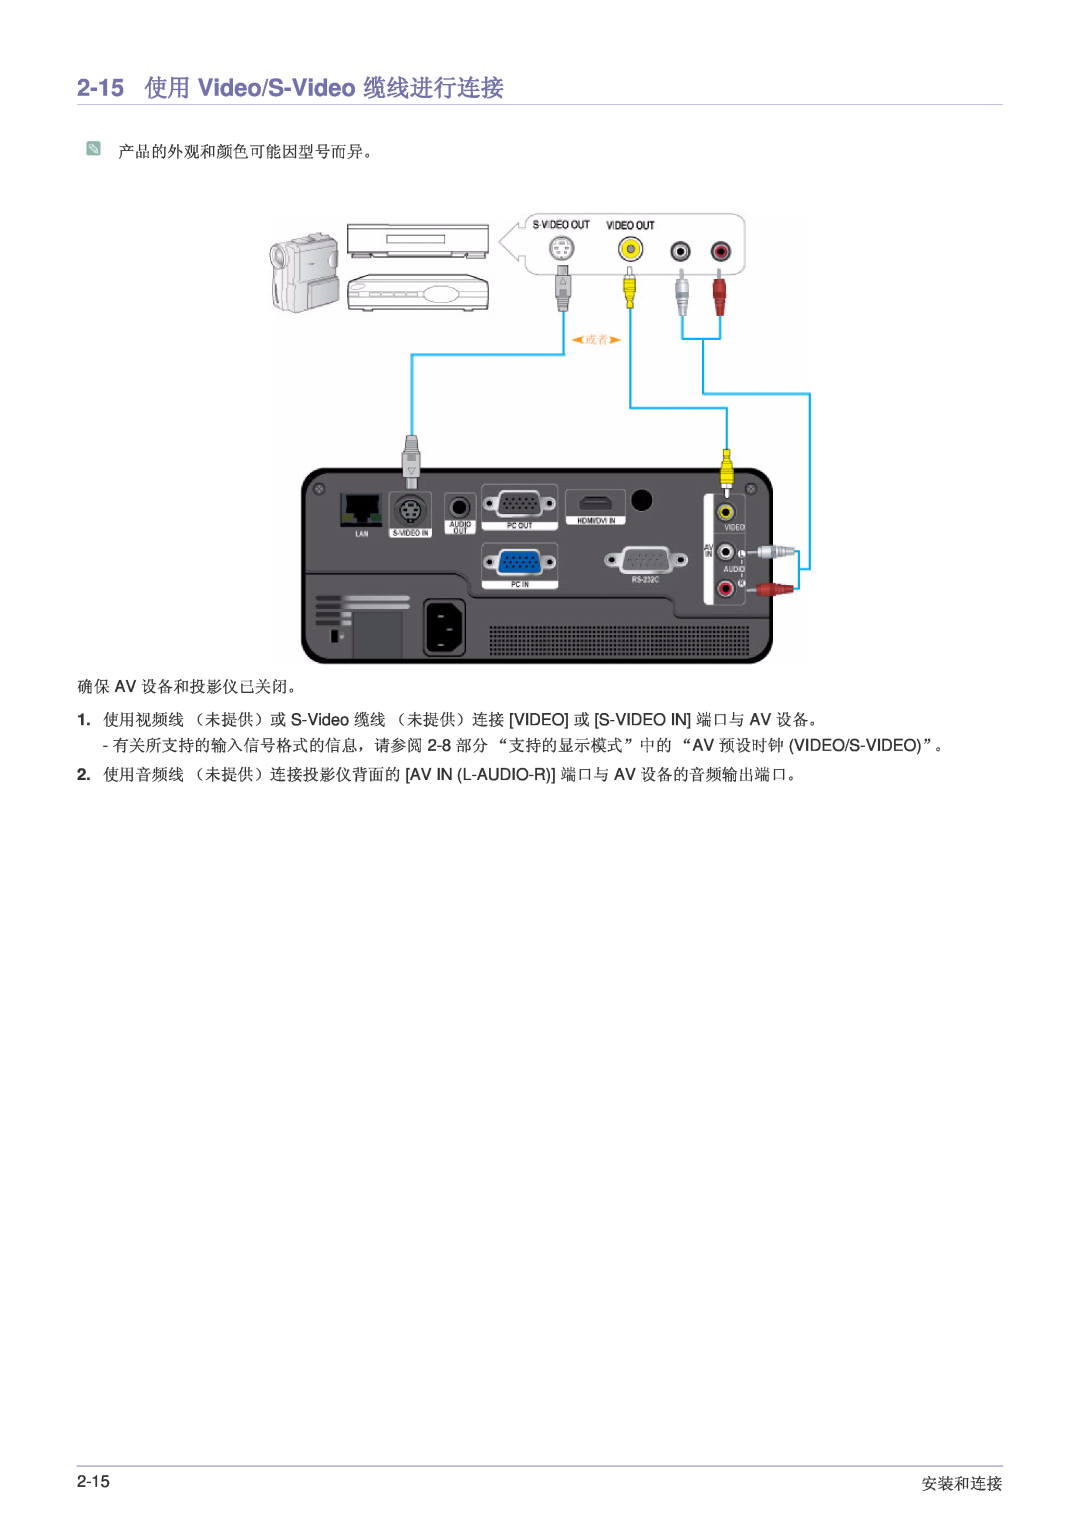 Samsung SP1005XWX/EN, SP1055XWX/EN manual 2-15 使用 Video/S-Video 缆线进行连接, 产品的外观和颜色可能因型号而异。 确保 Av 设备和投影仪已关闭。, 安装和连接 